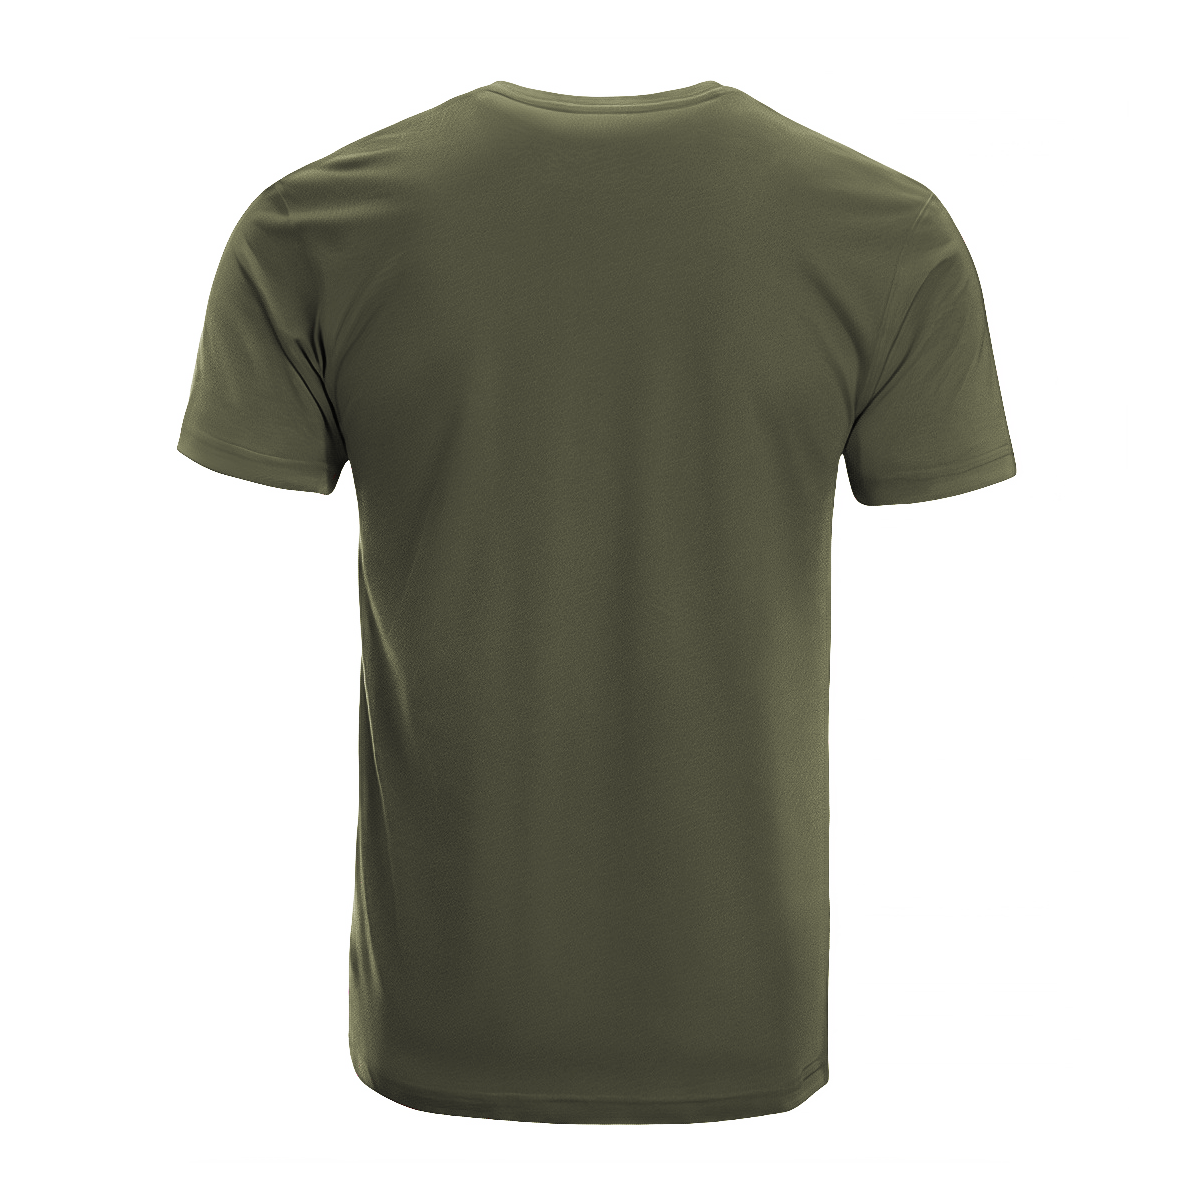 Kinnear Tartan Crest T-shirt - I'm not yelling style